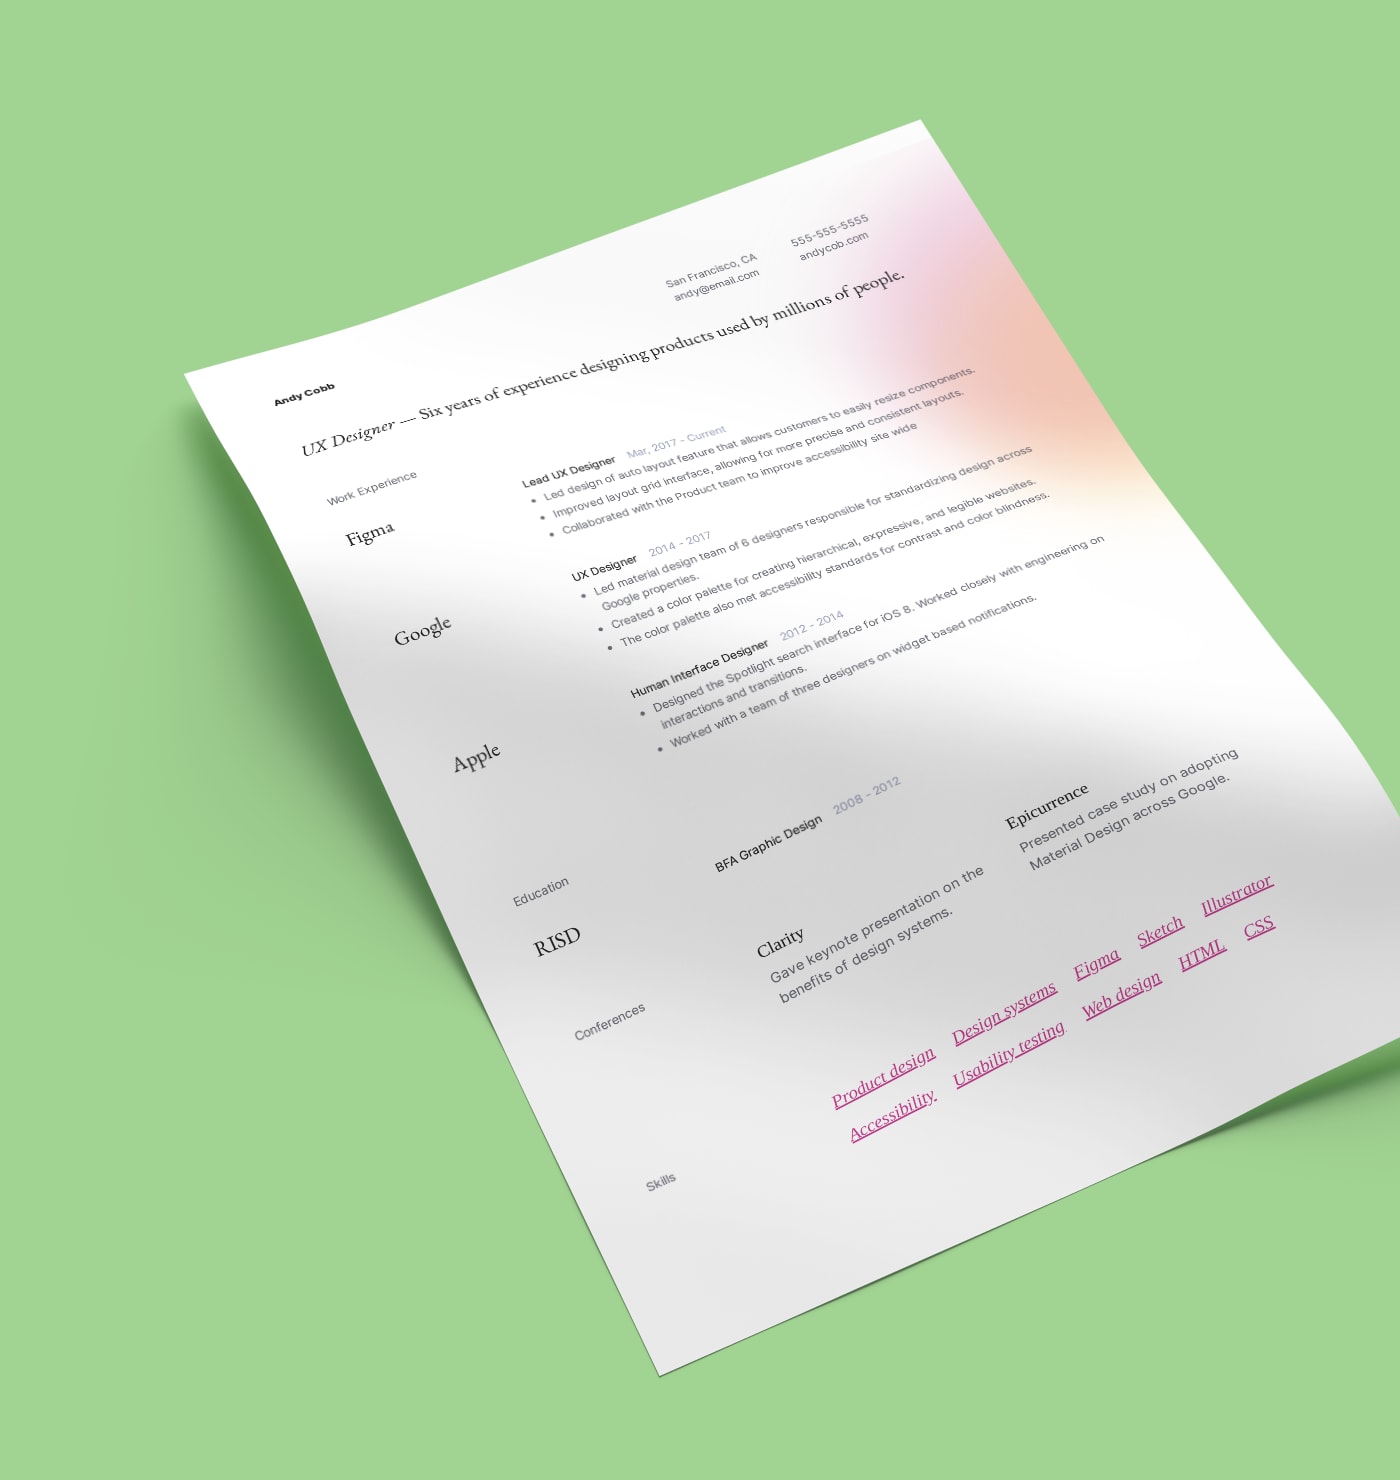 Cordova creative resume template created with Standard Resume builder.